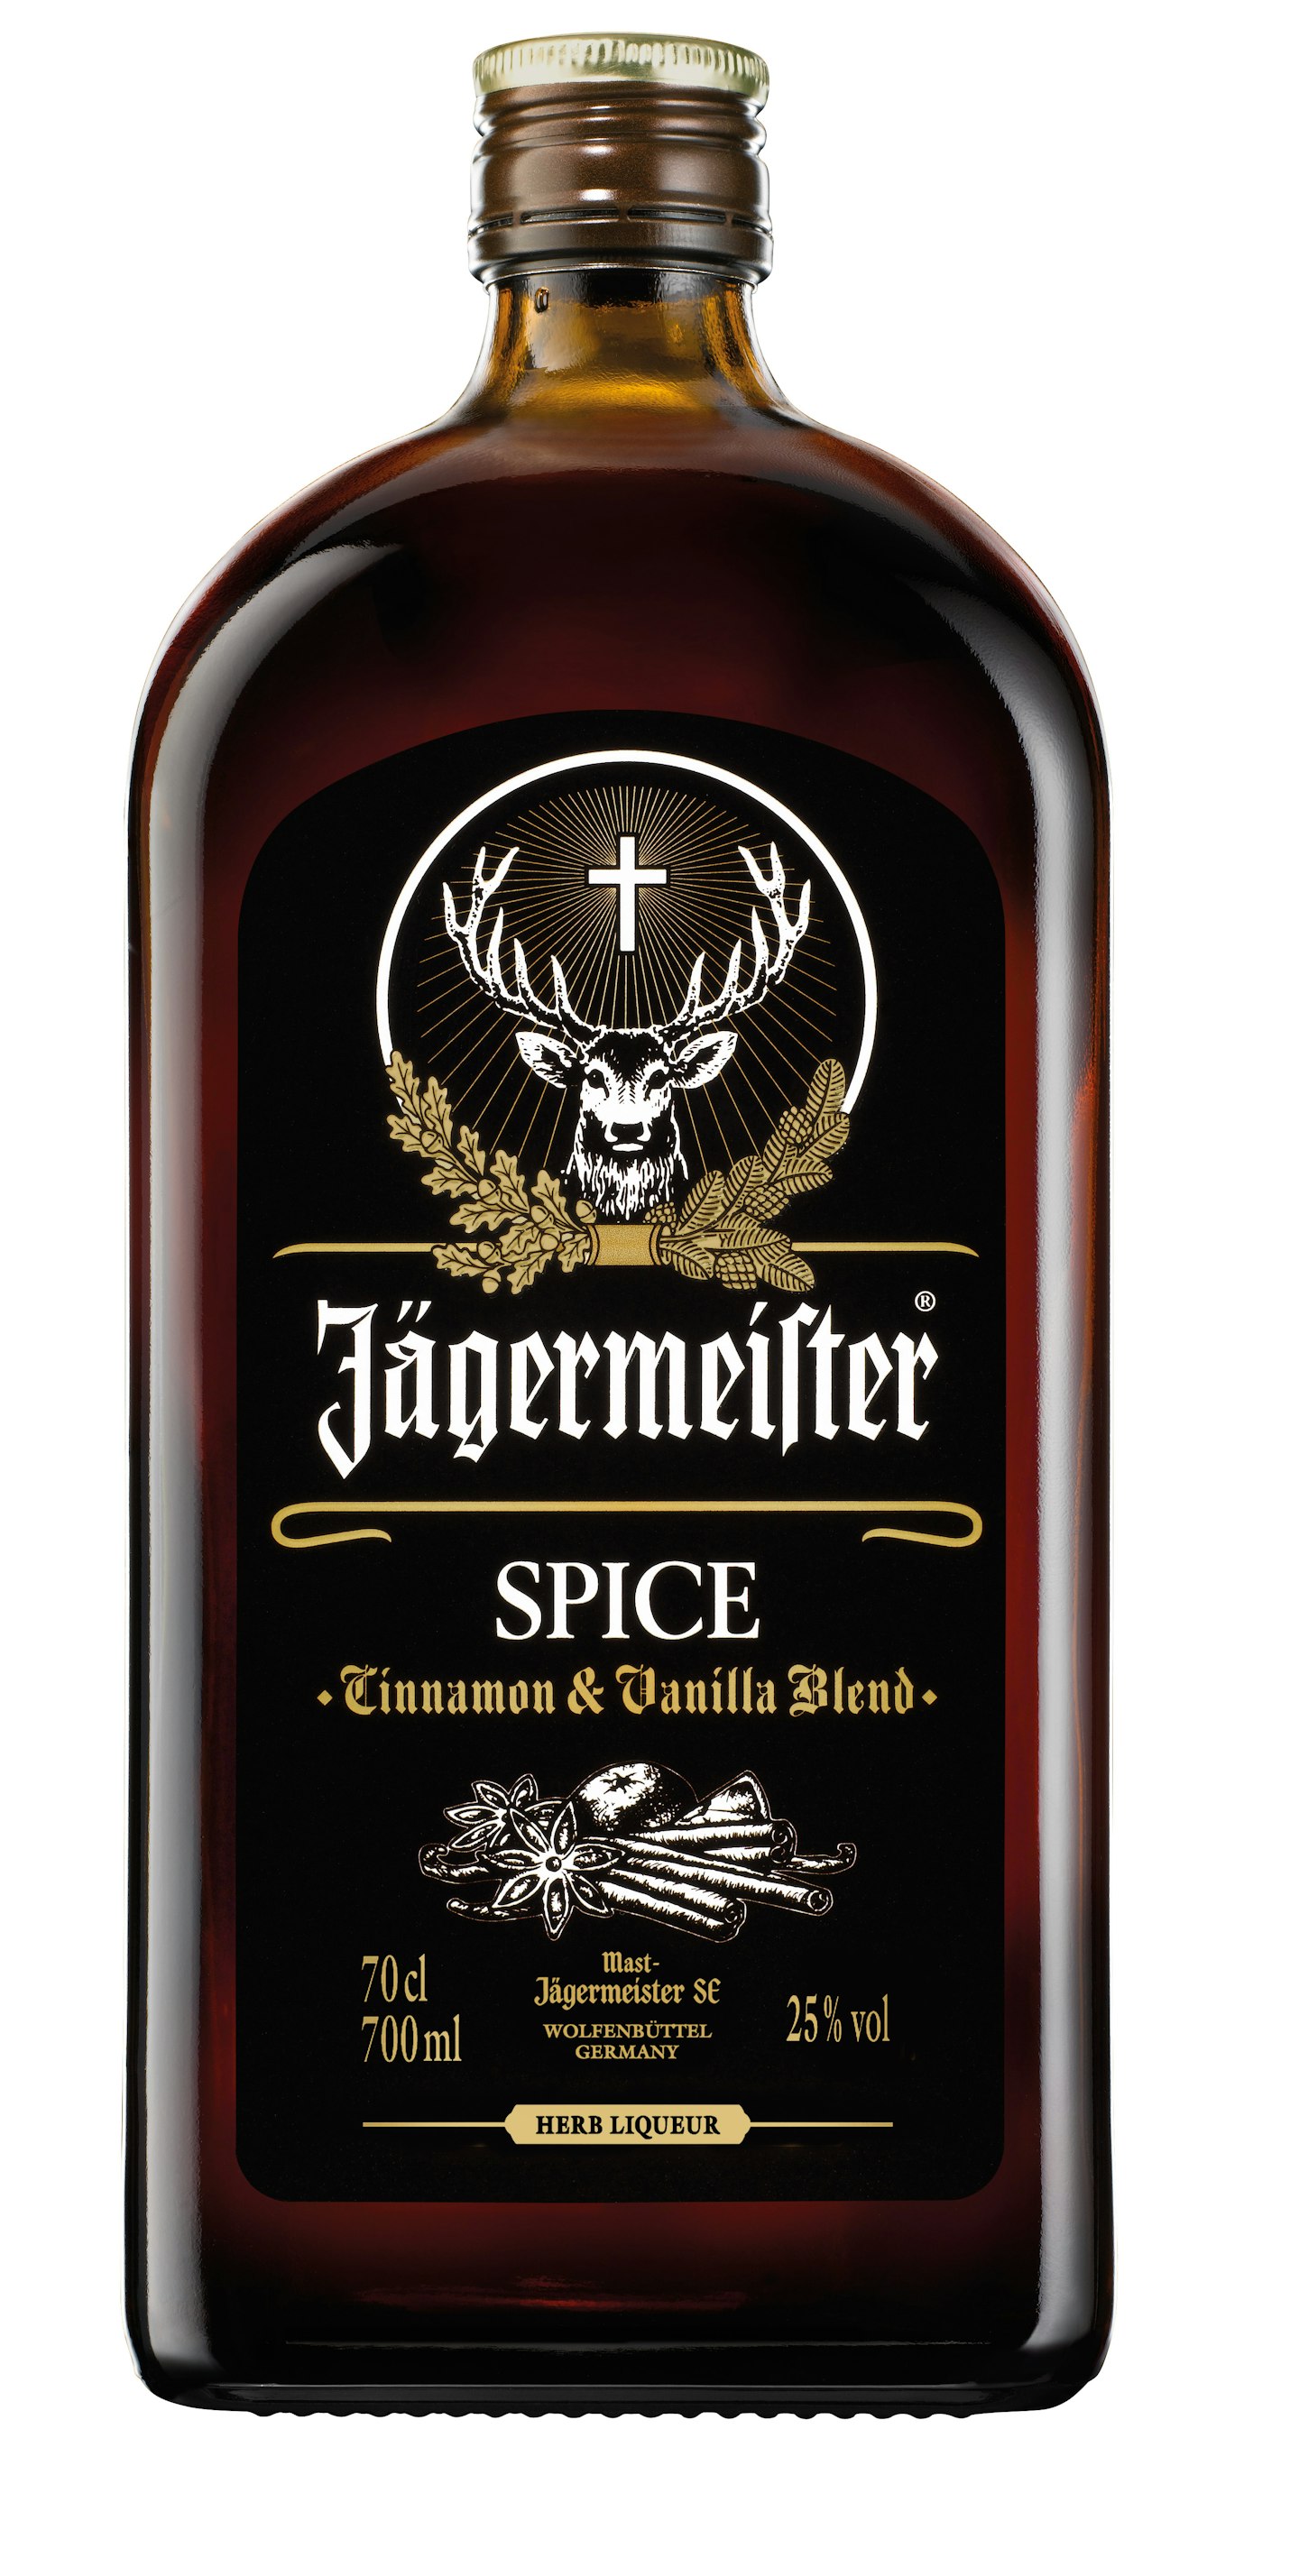 £18, Jagermeister Spice, www.tesco.com